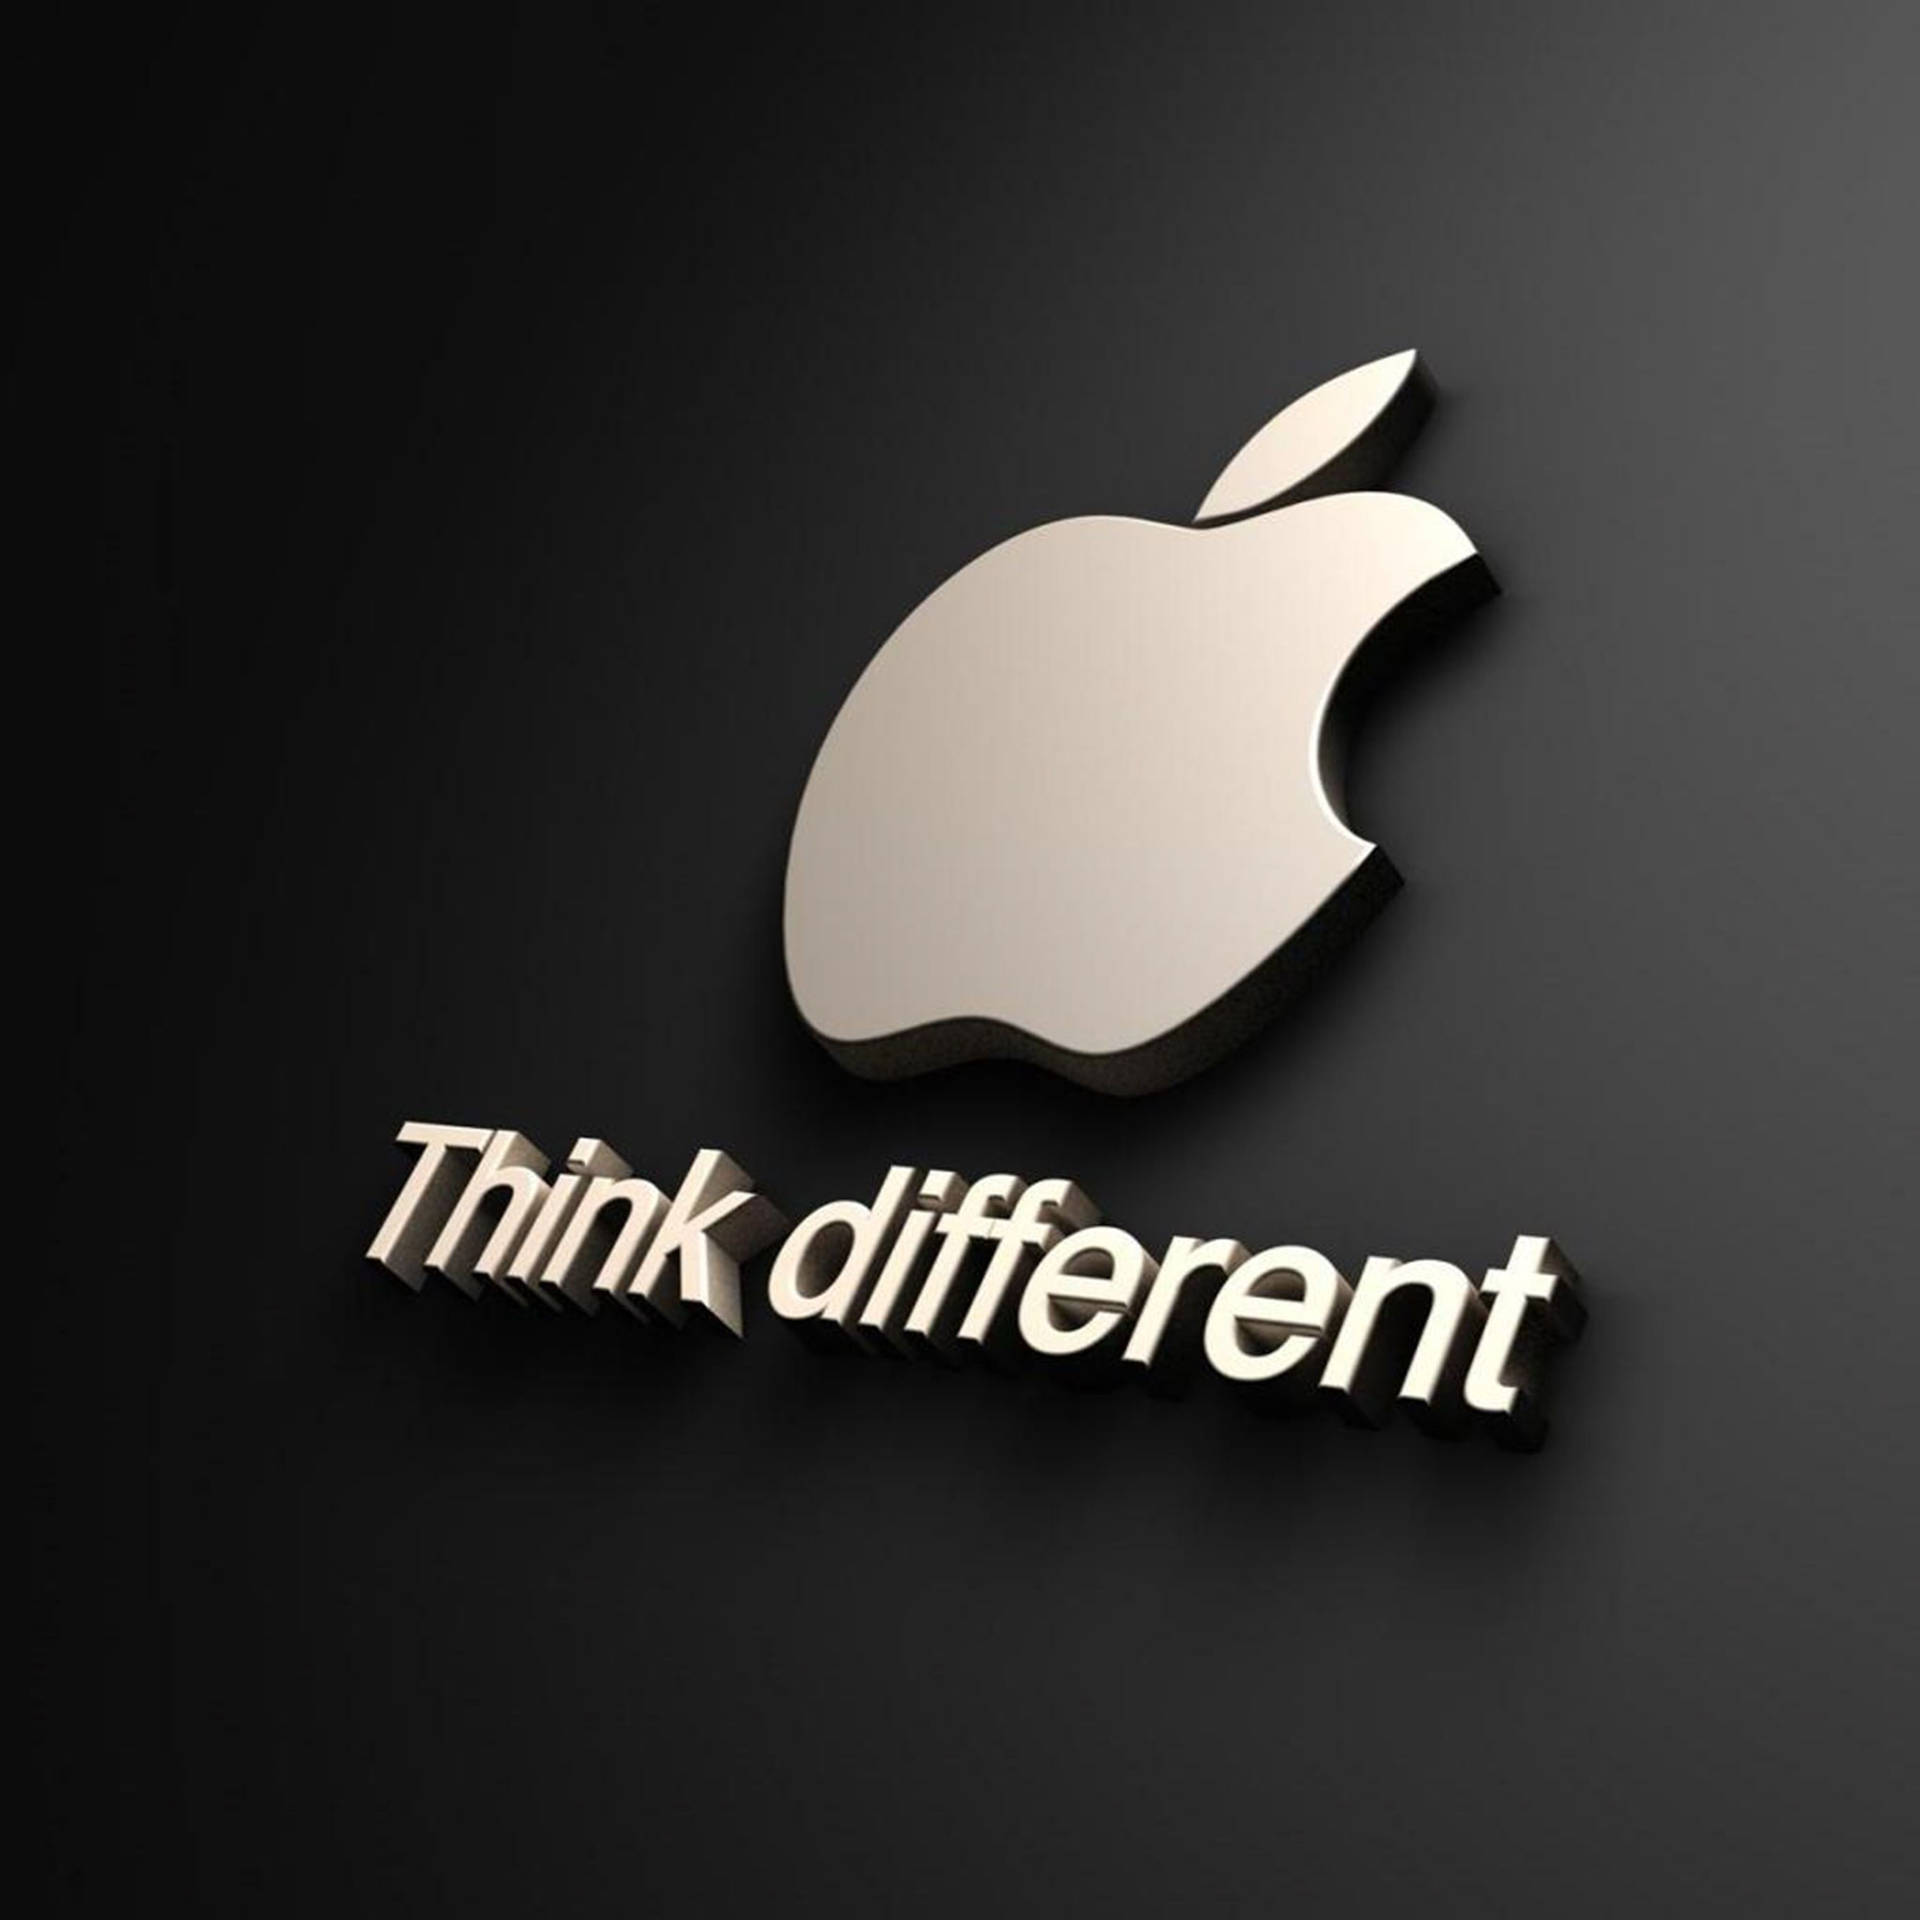 Download 3d Apple Iphone Logo And Slogan Wallpaper | Wallpapers.com